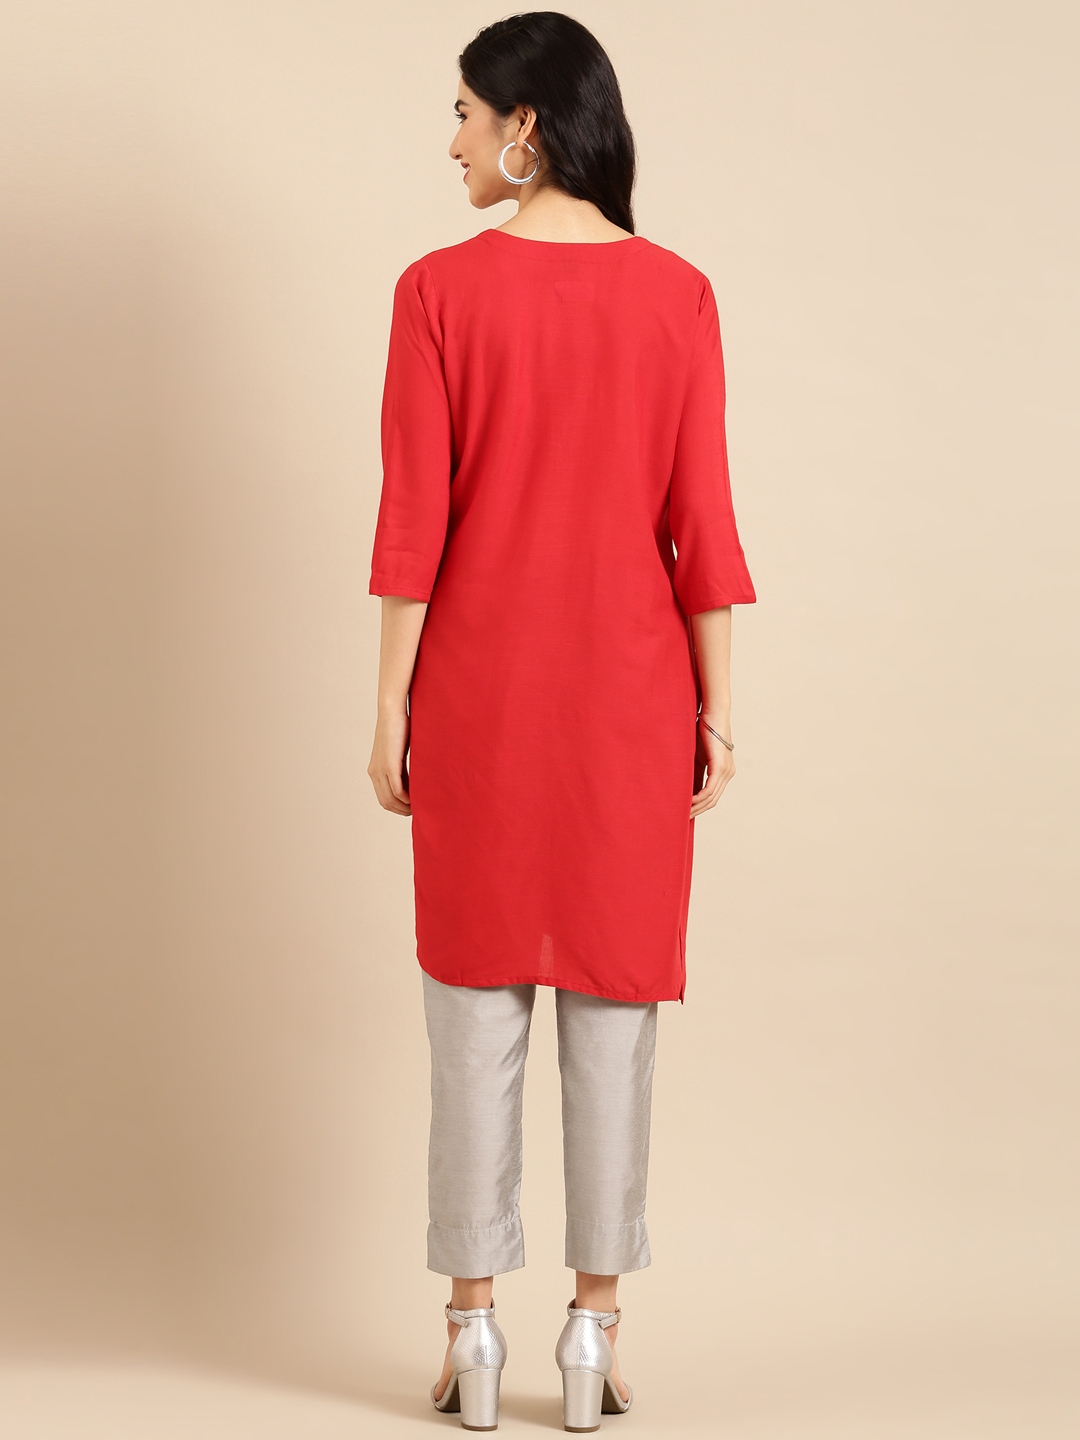 Women's Red Cotton Blend Solid Comfort Fit Kurtis